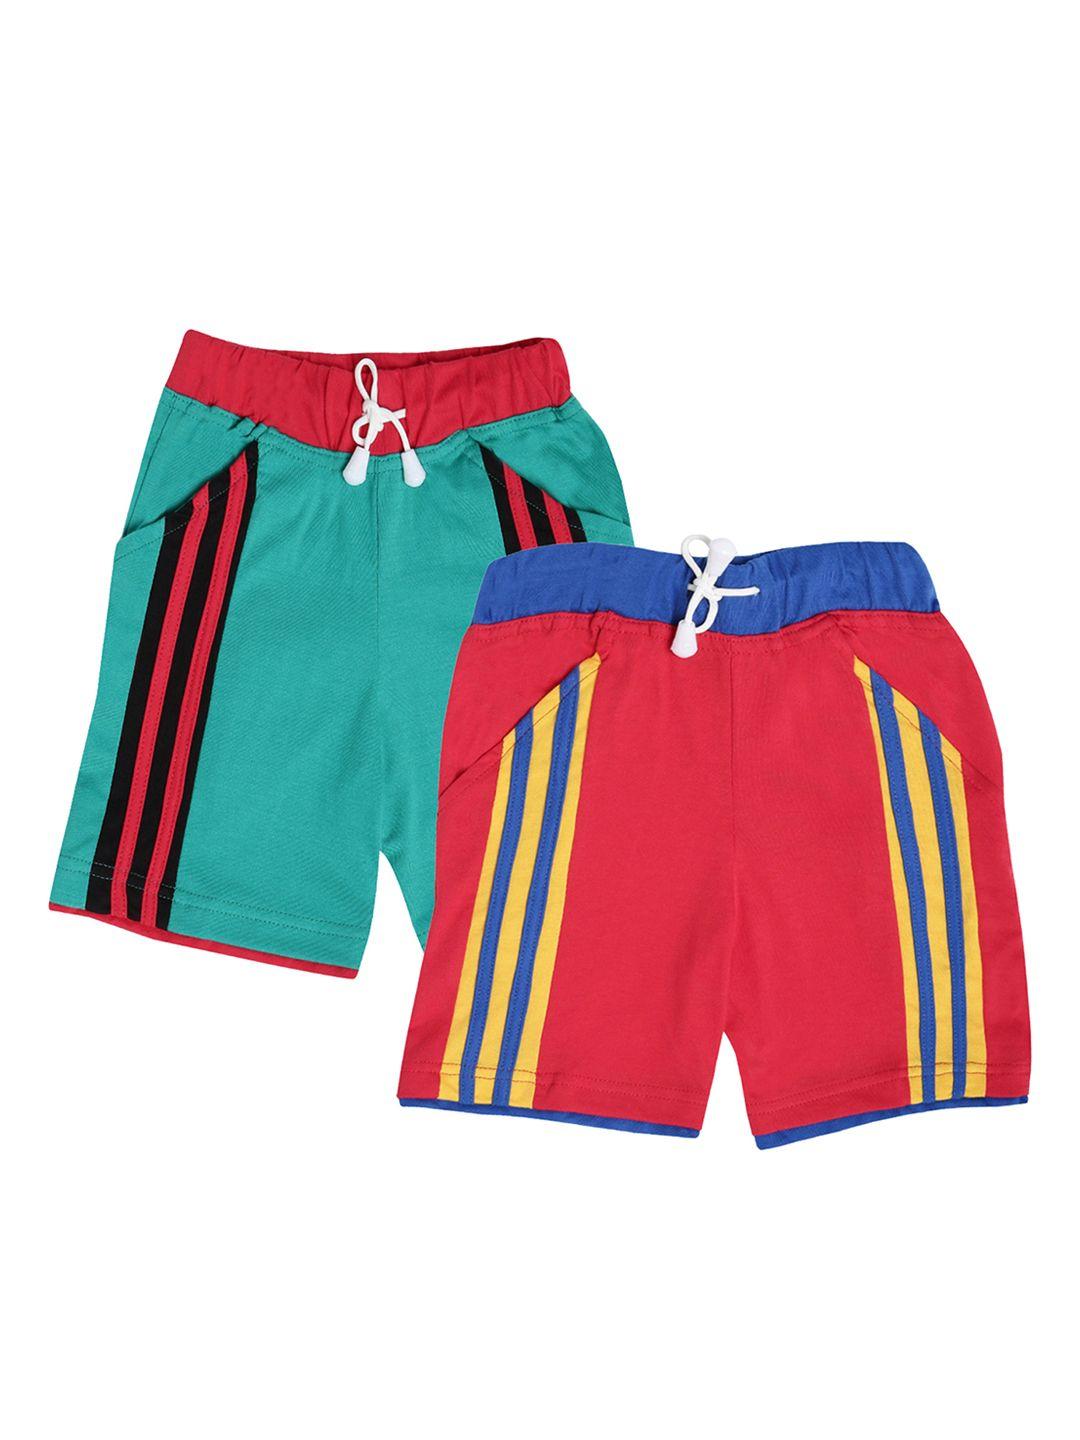 dollar champion kidswear boys pack of 2 lounge shorts mcbb-112-po2-red-grn